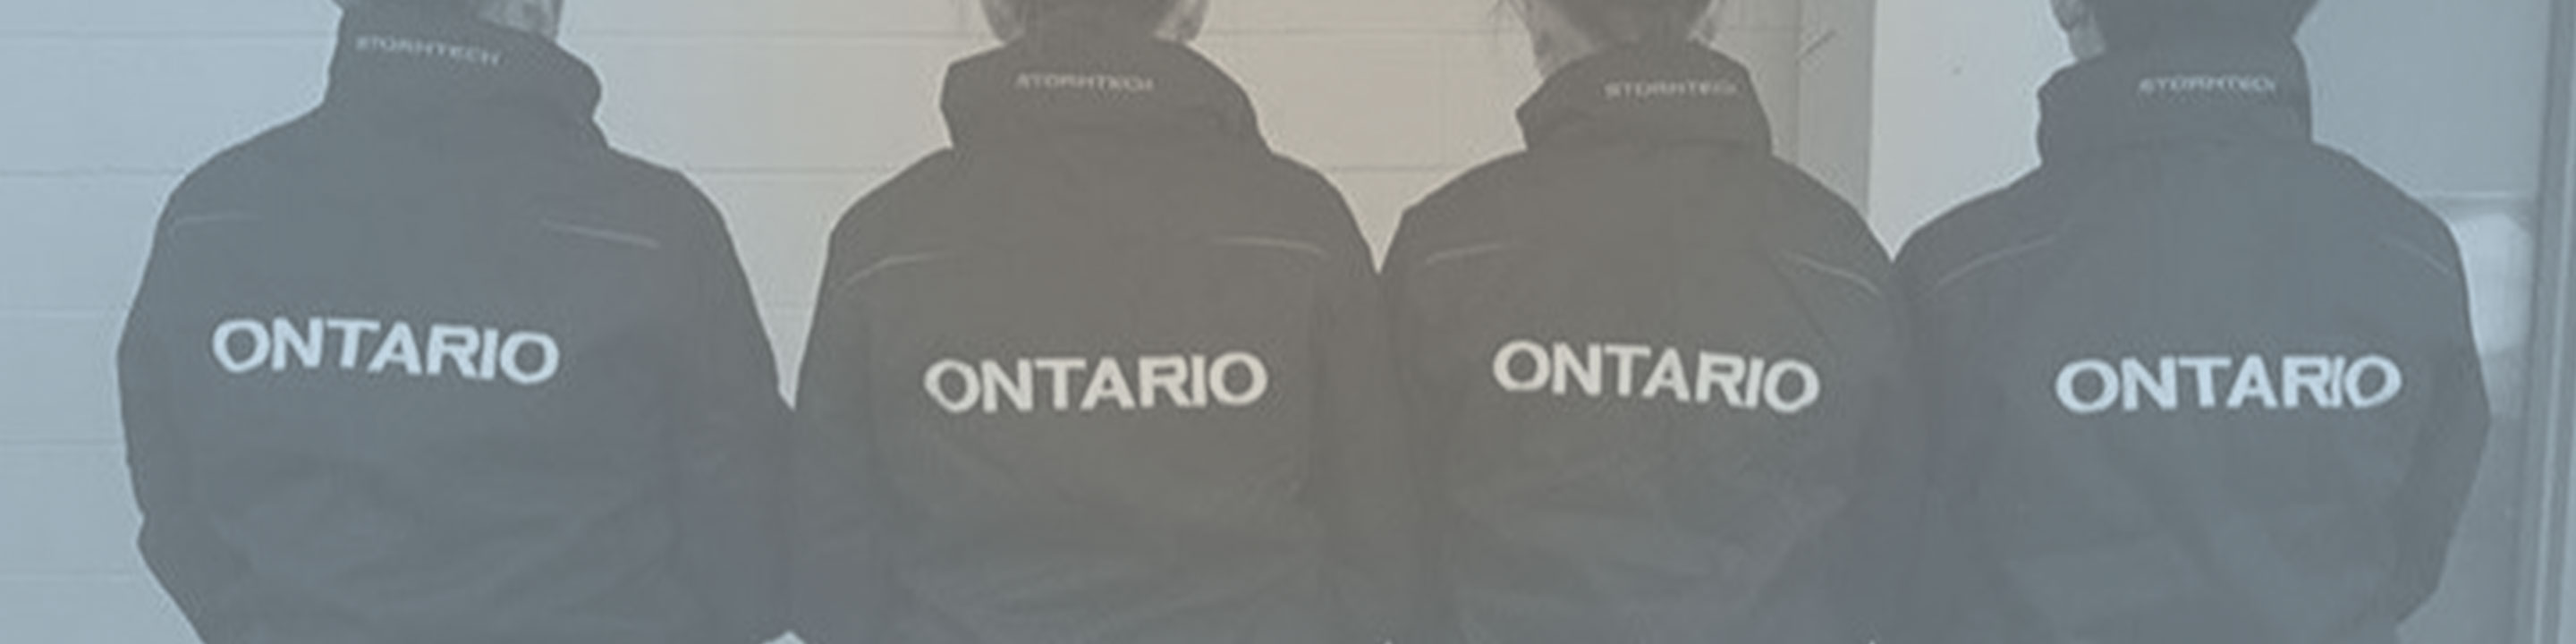 Ontario Jackets